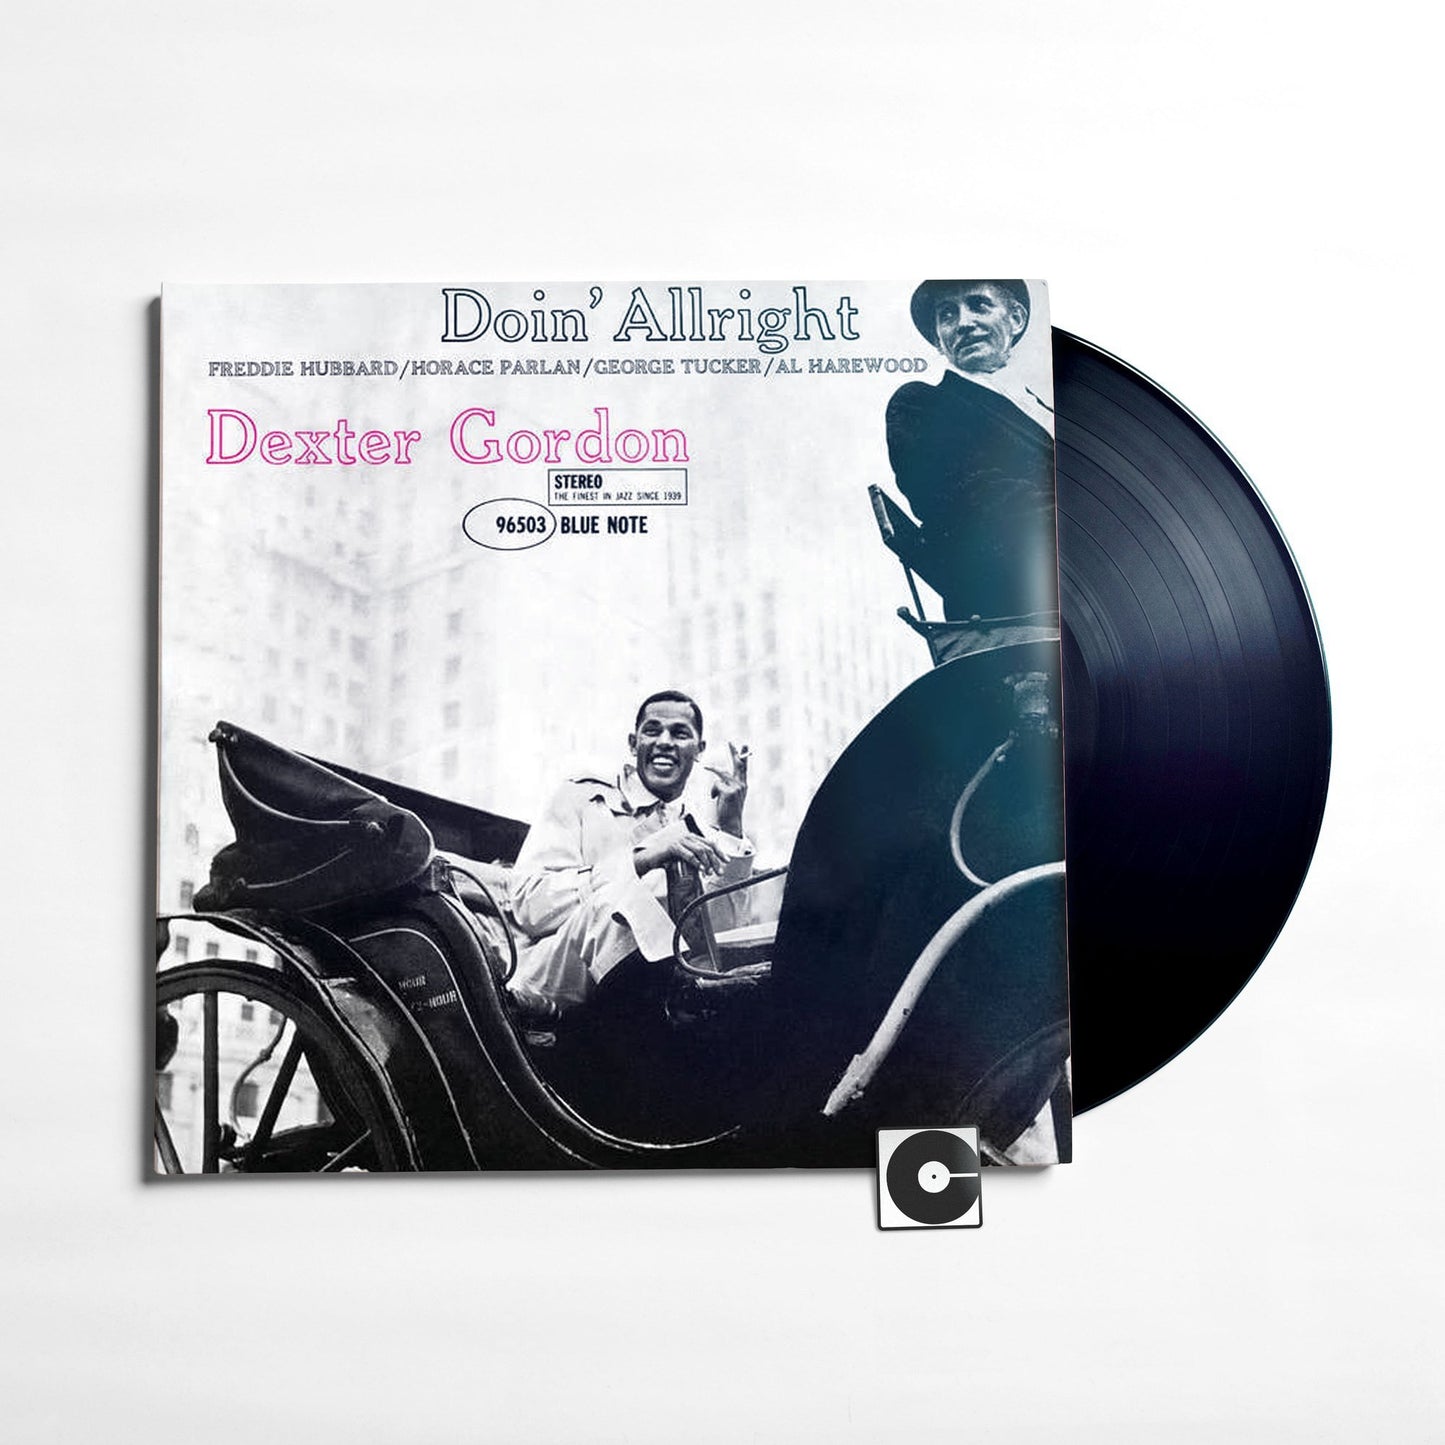 Dexter Gordon - "Doin' Allright"